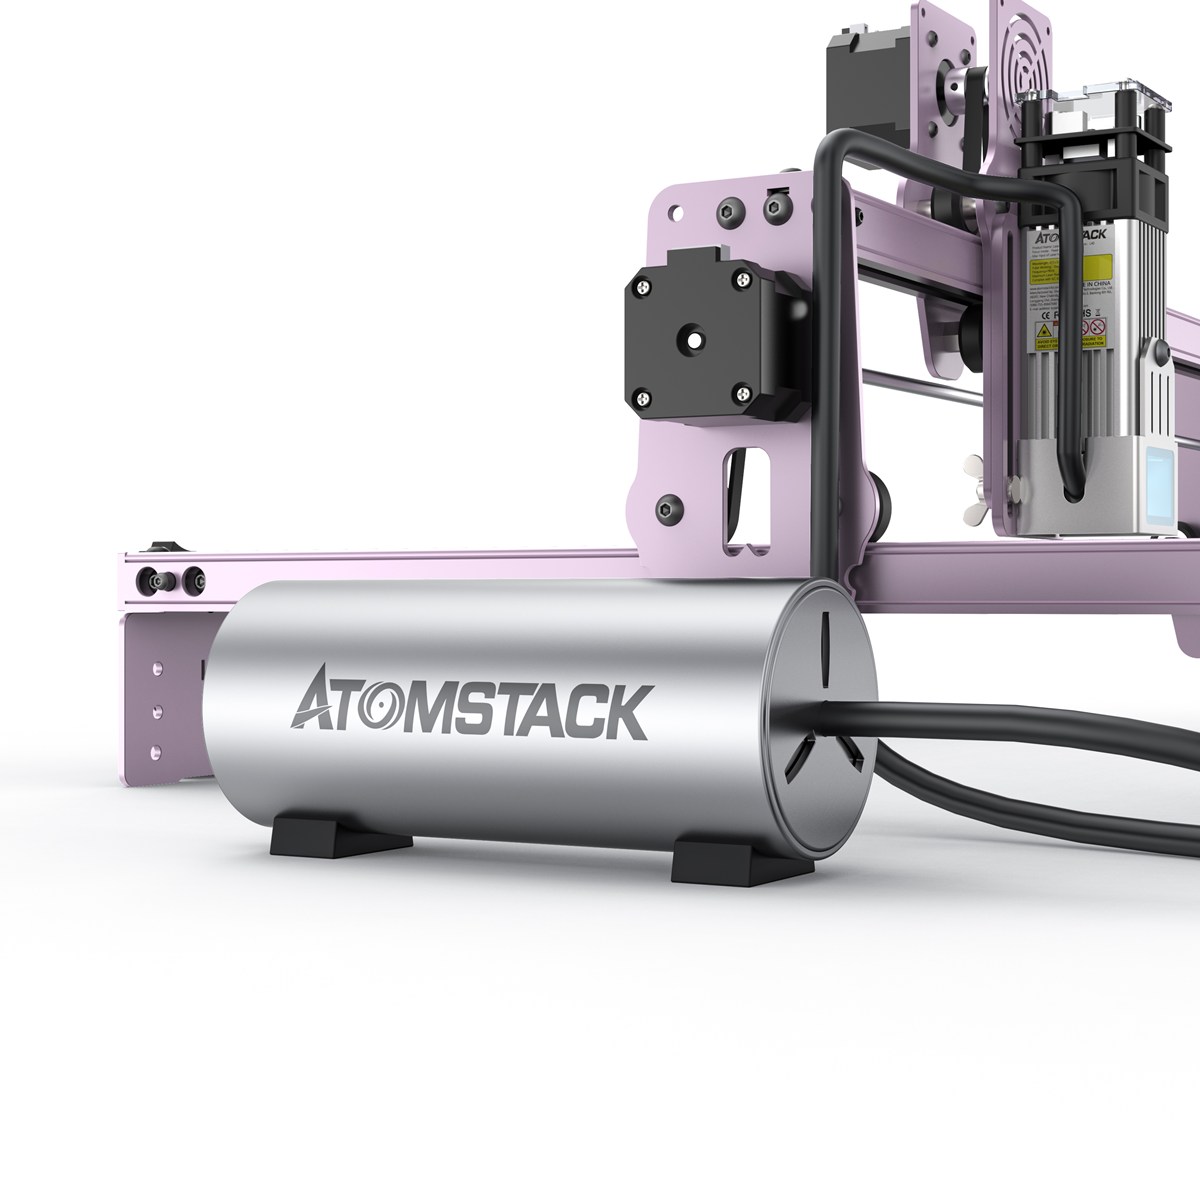 Atomstack-Air-Assist-System-for-Laser-Engraving-Machine-Laser-Cutting-Engraving-Air-assisted-Accesso-1932834-3